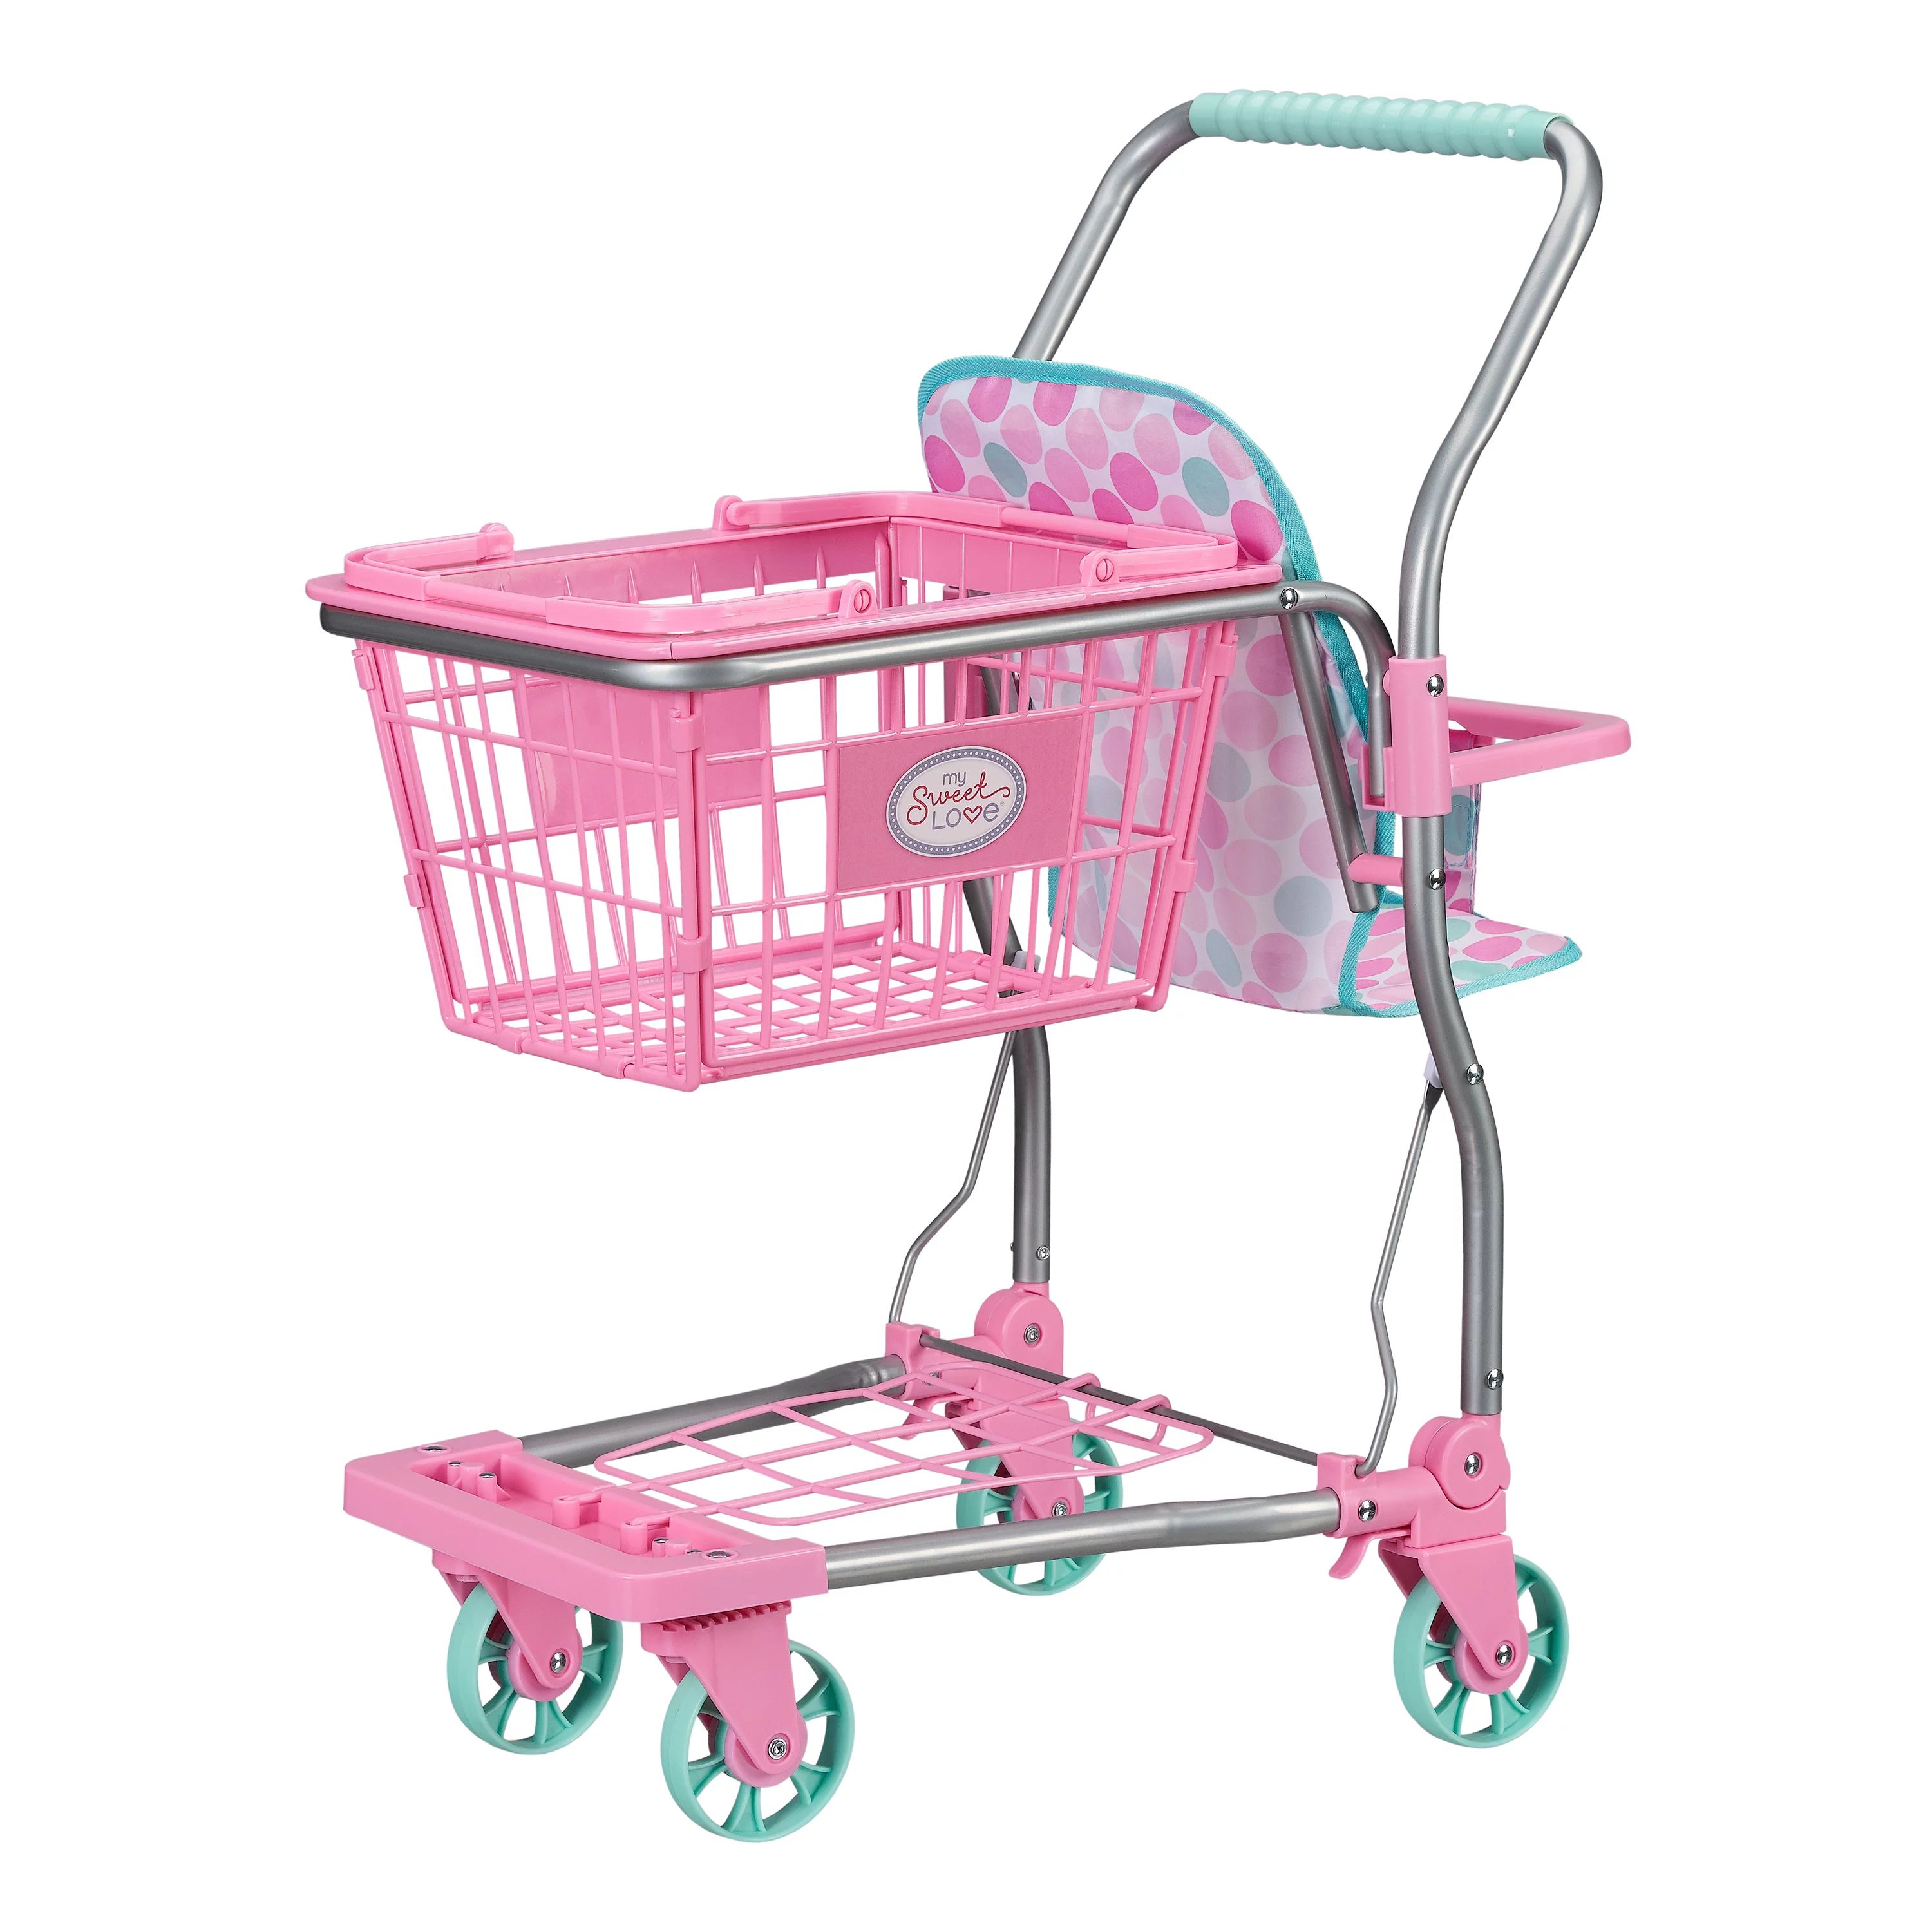 My Sweet Love Shopping Cart for 18" Dolls - Walmart.com | Walmart (US)